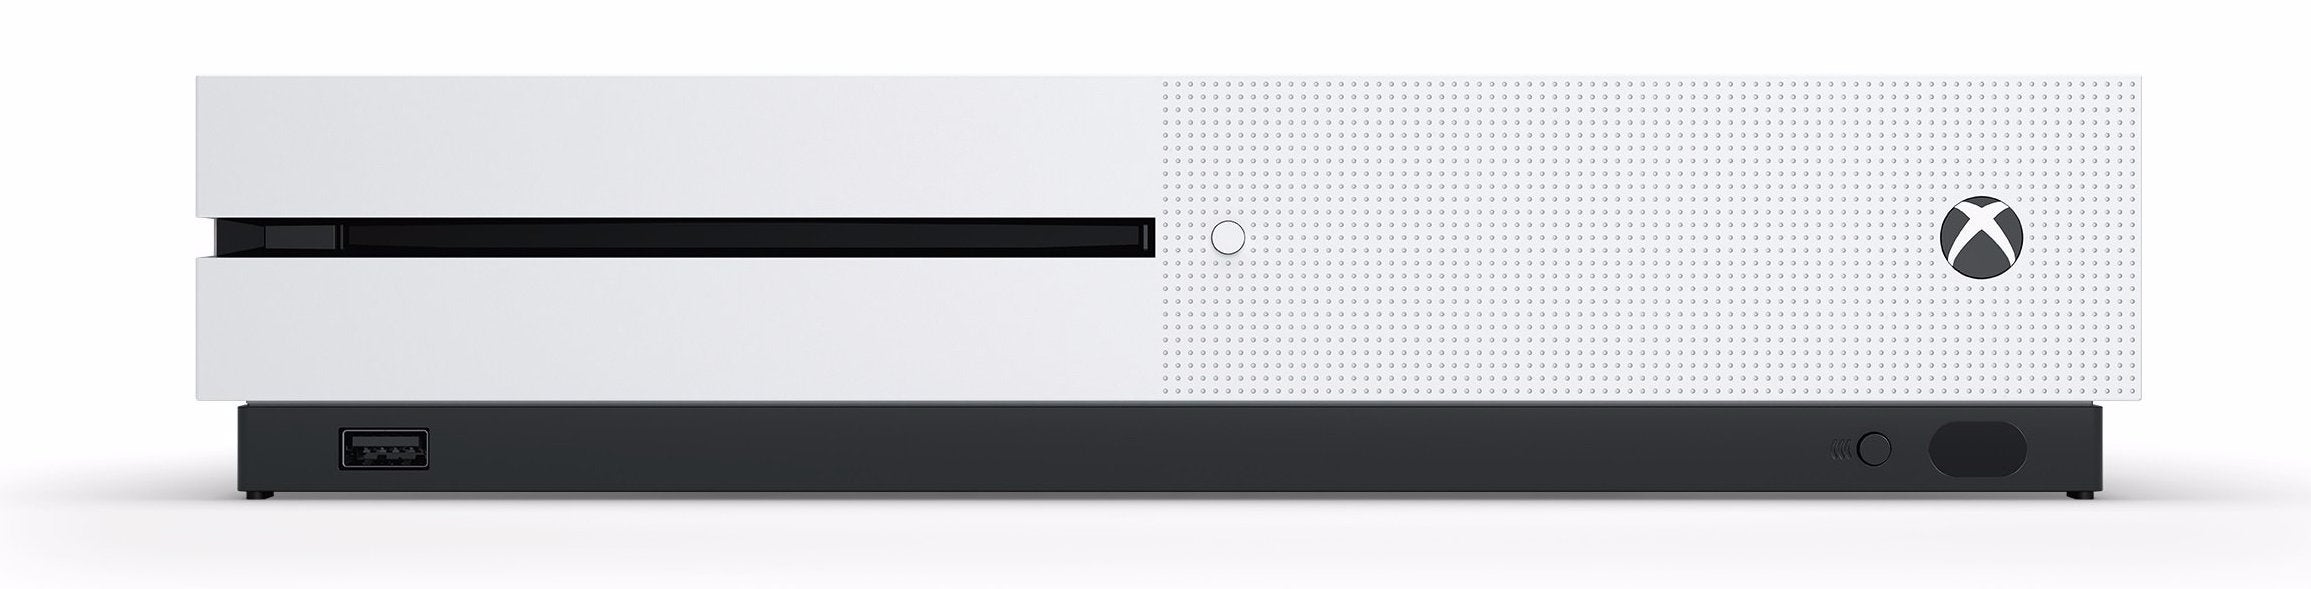 Imagen para Todo lo que sabemos de Xbox One S